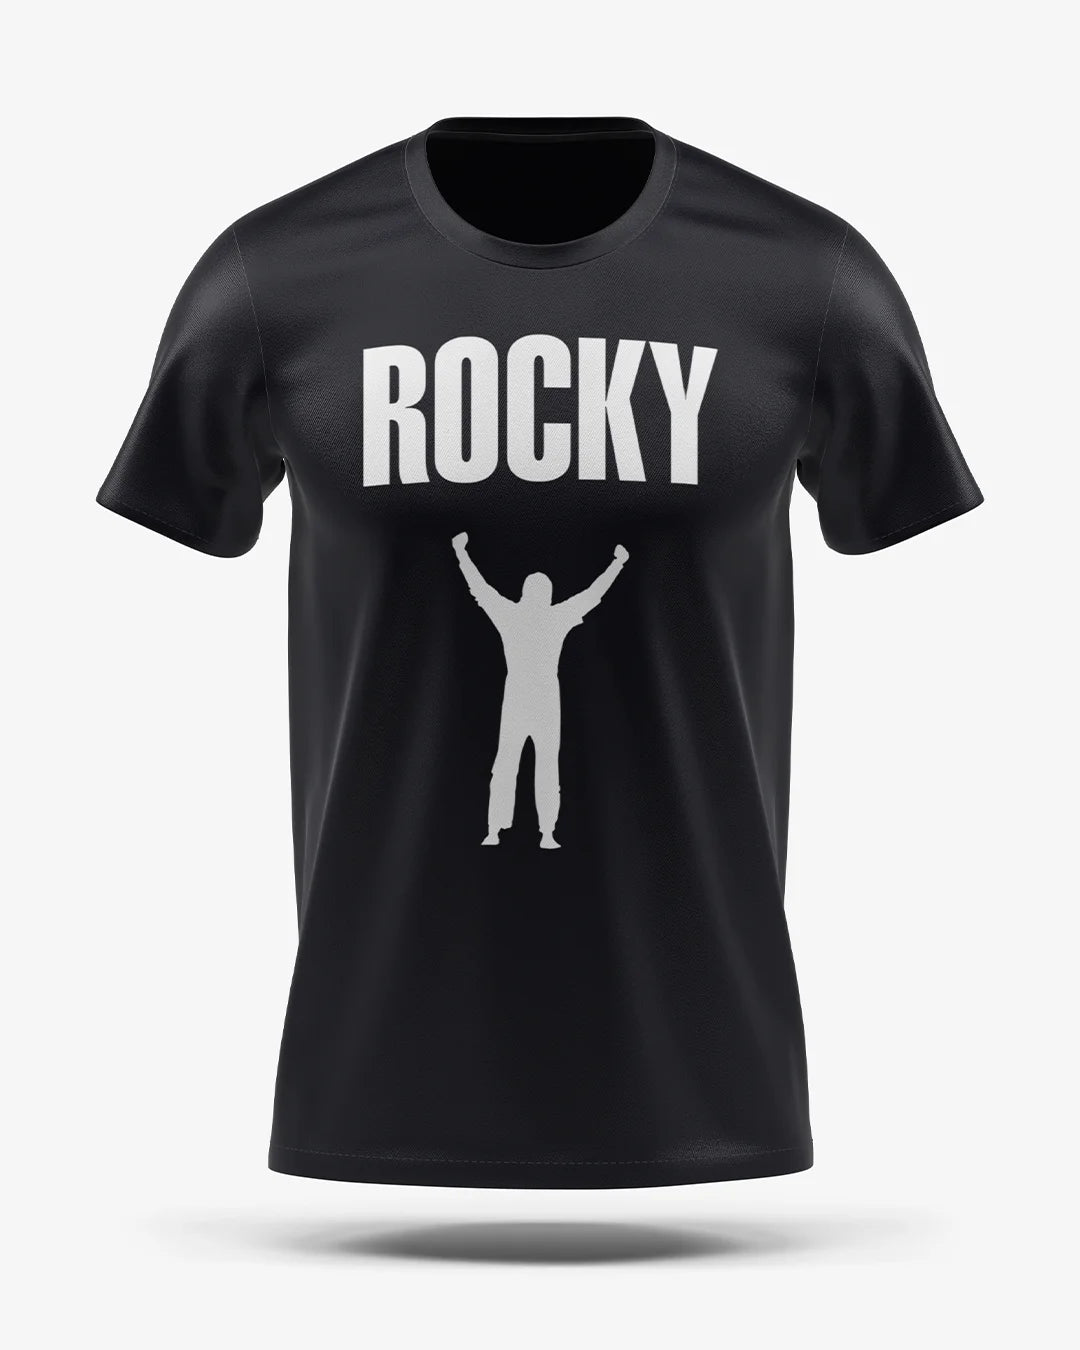 Camiseta Esporte Dry Fit - Rocky Stairs